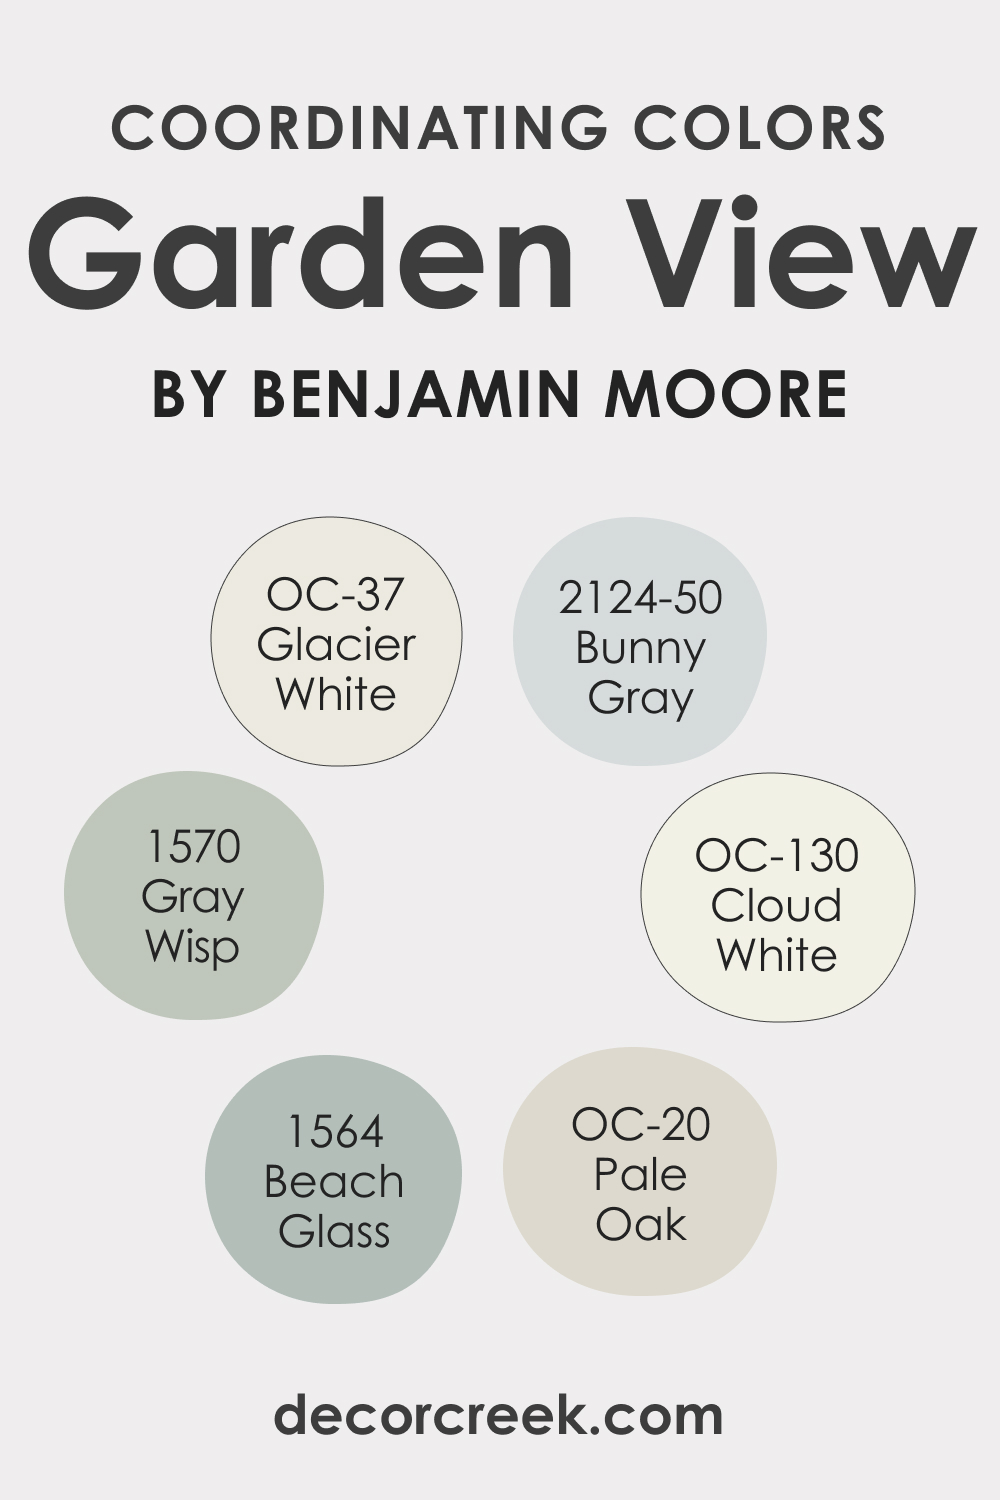 Coordinating Colors of Garden View 616